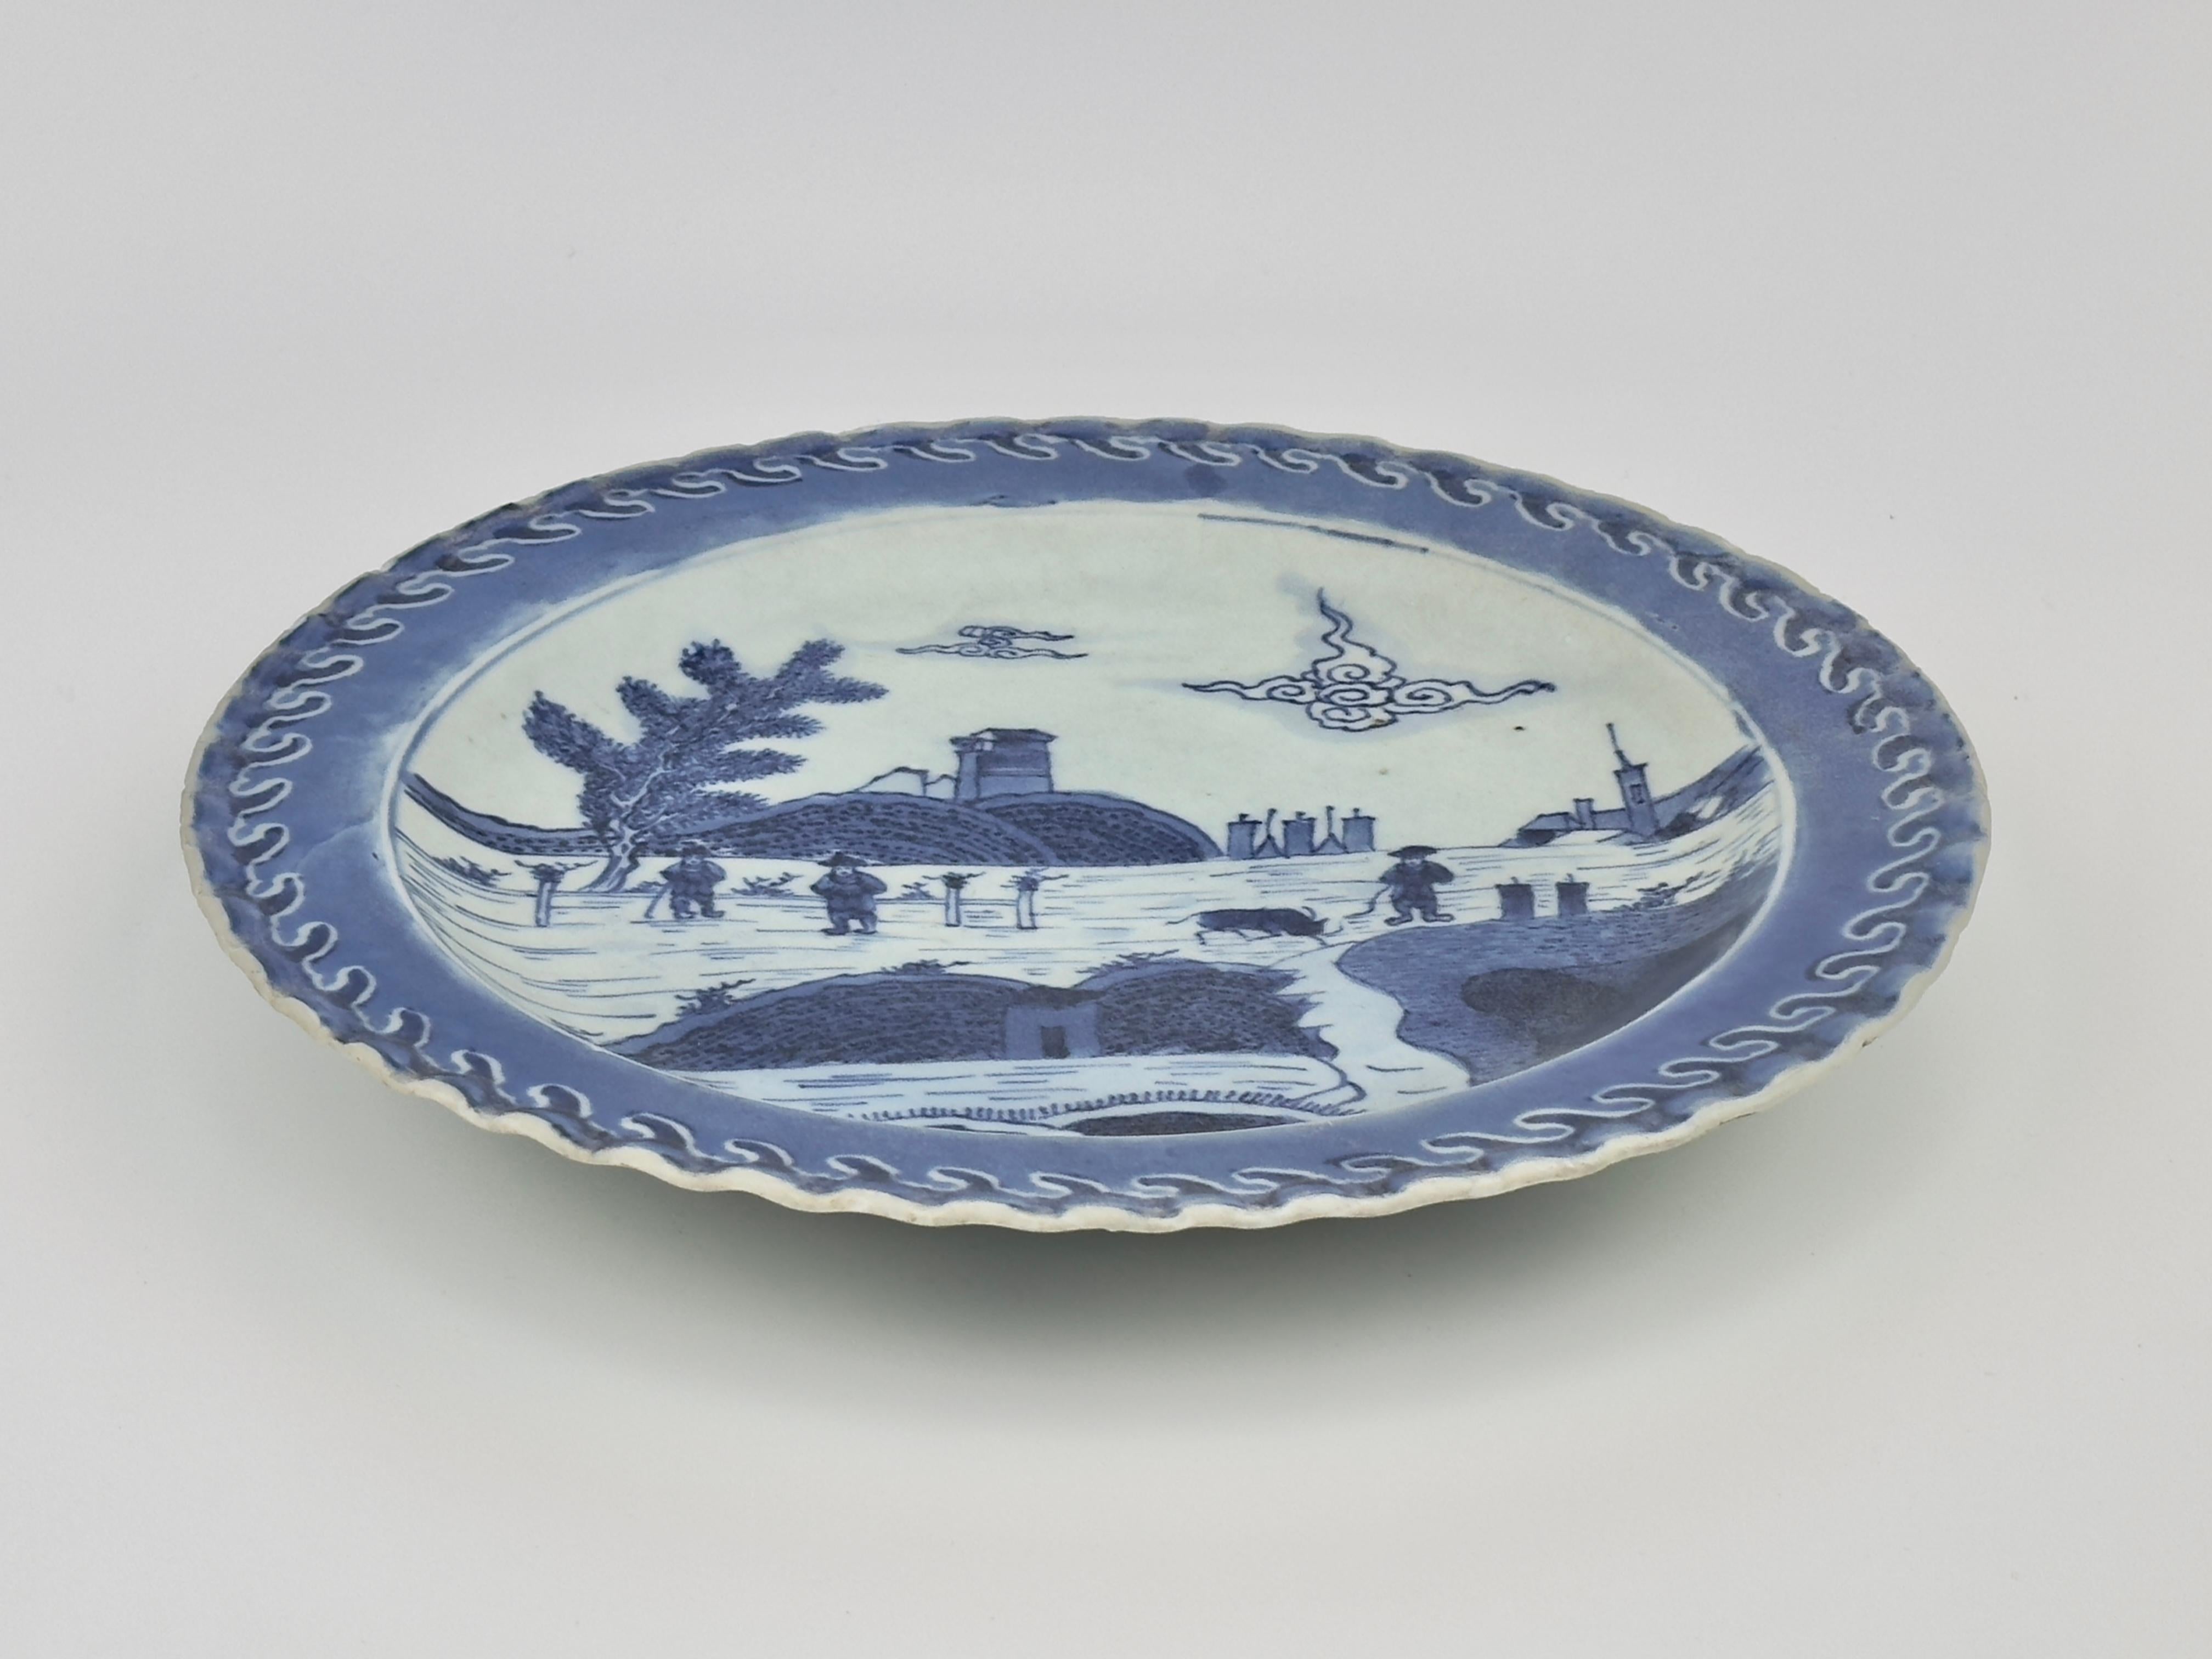 Chinese  'Deshima Island' Pattern Blue and White dish c1725, Qing Dynasty, Yongzheng Era For Sale